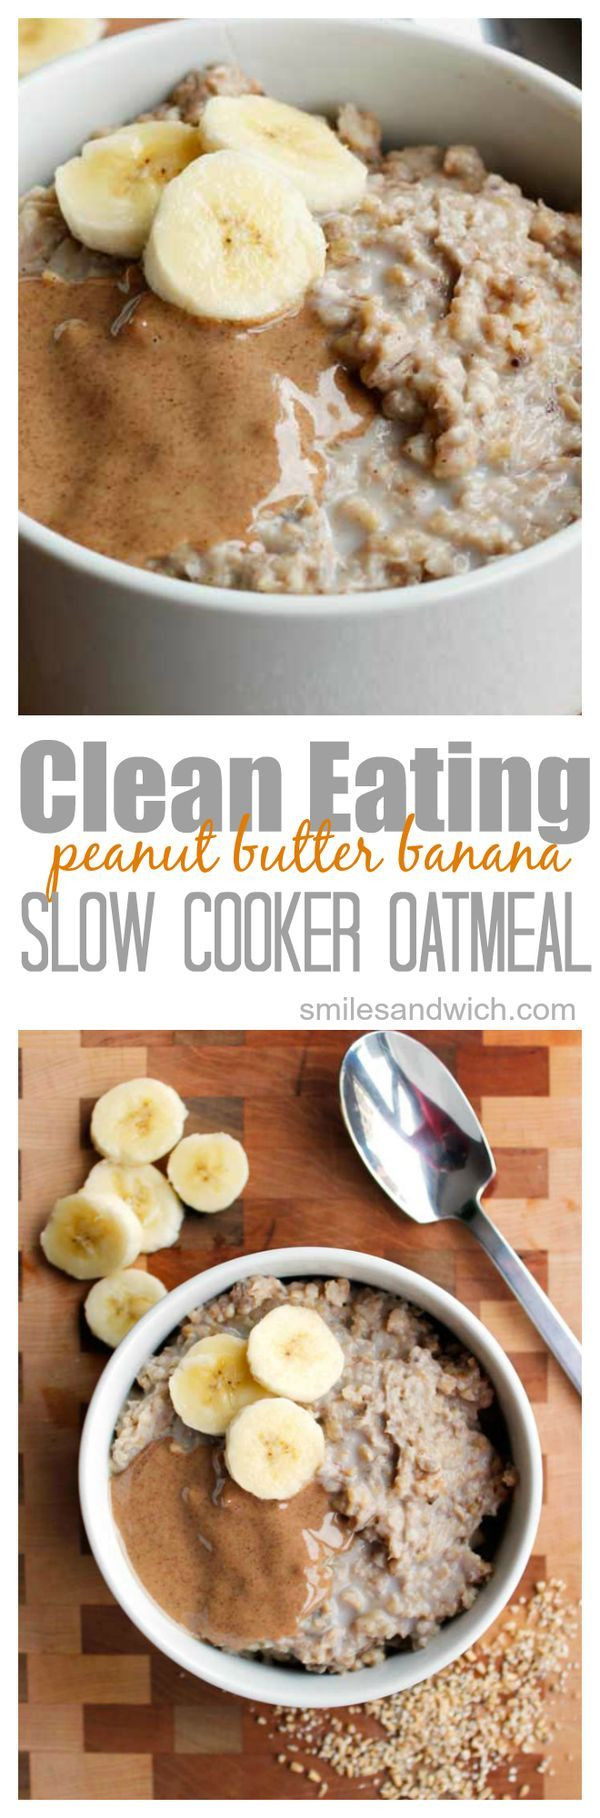 Clean Eating Oatmeal
 Clean Eating Peanut Butter Banana Slow Cooker Oatmeal